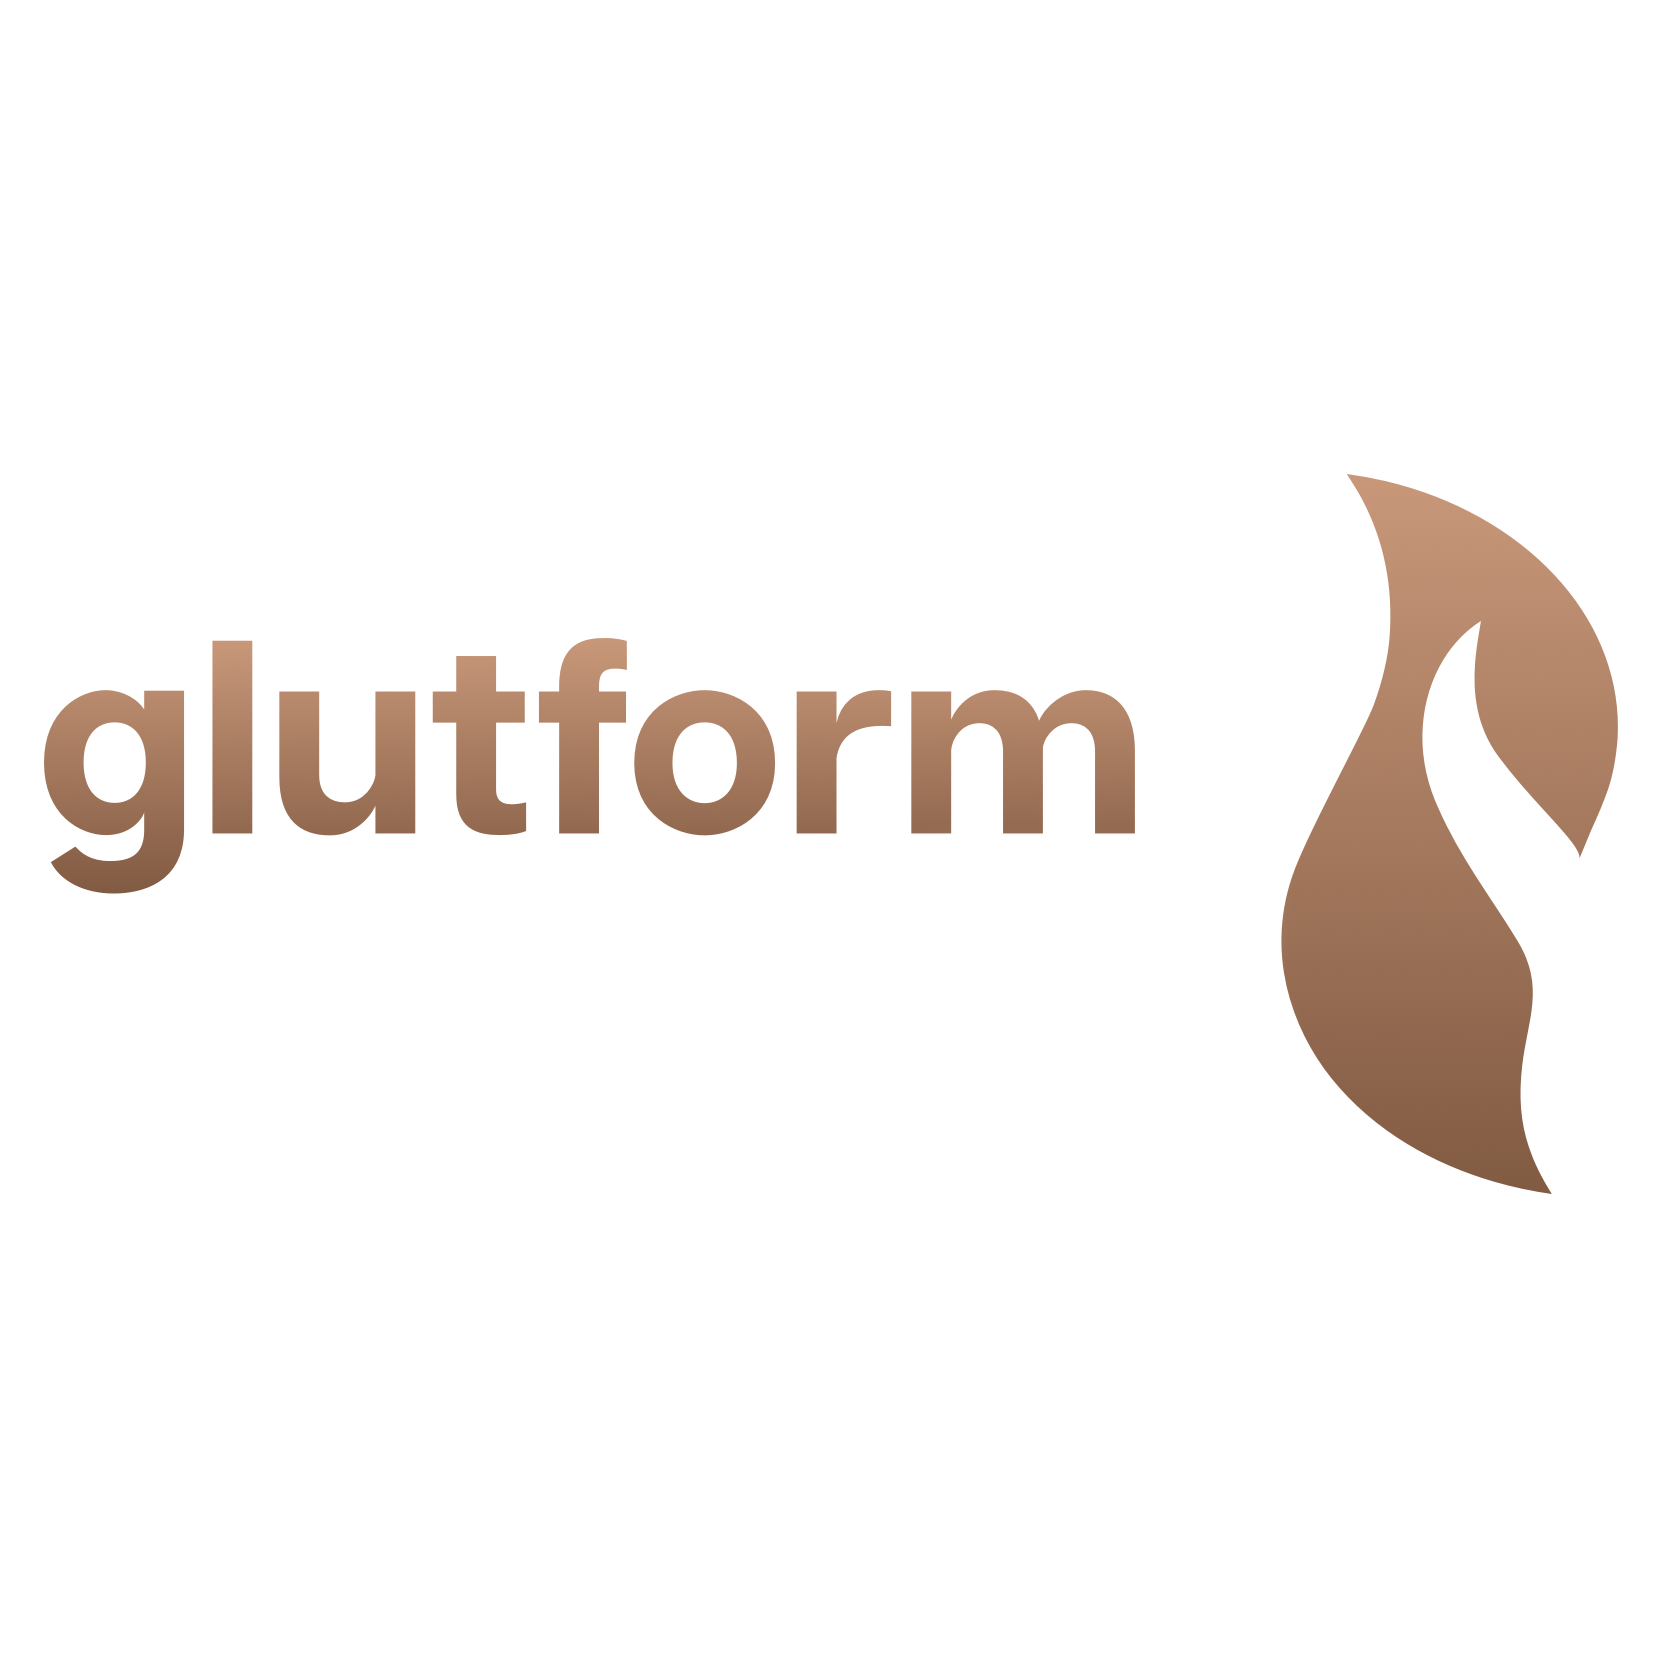 Glutform AG Logo